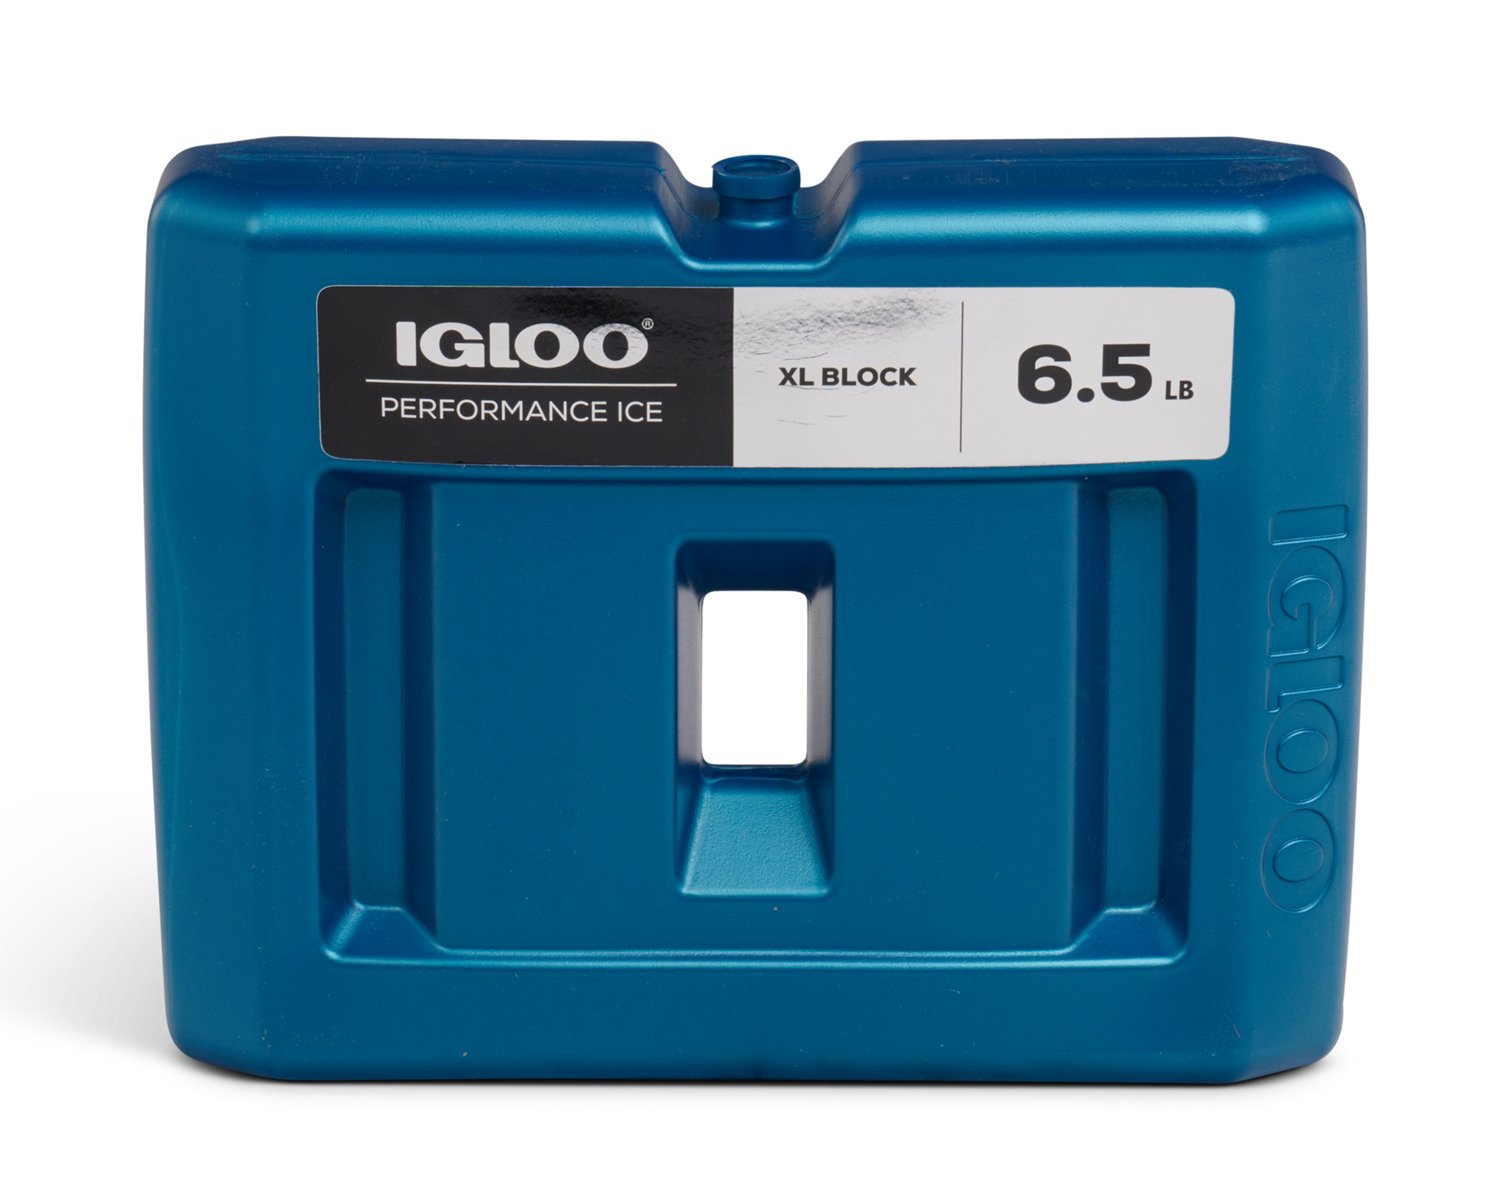 Igloo MaxCold Ice Pack 8 oz Blue 1 pk - Ace Hardware